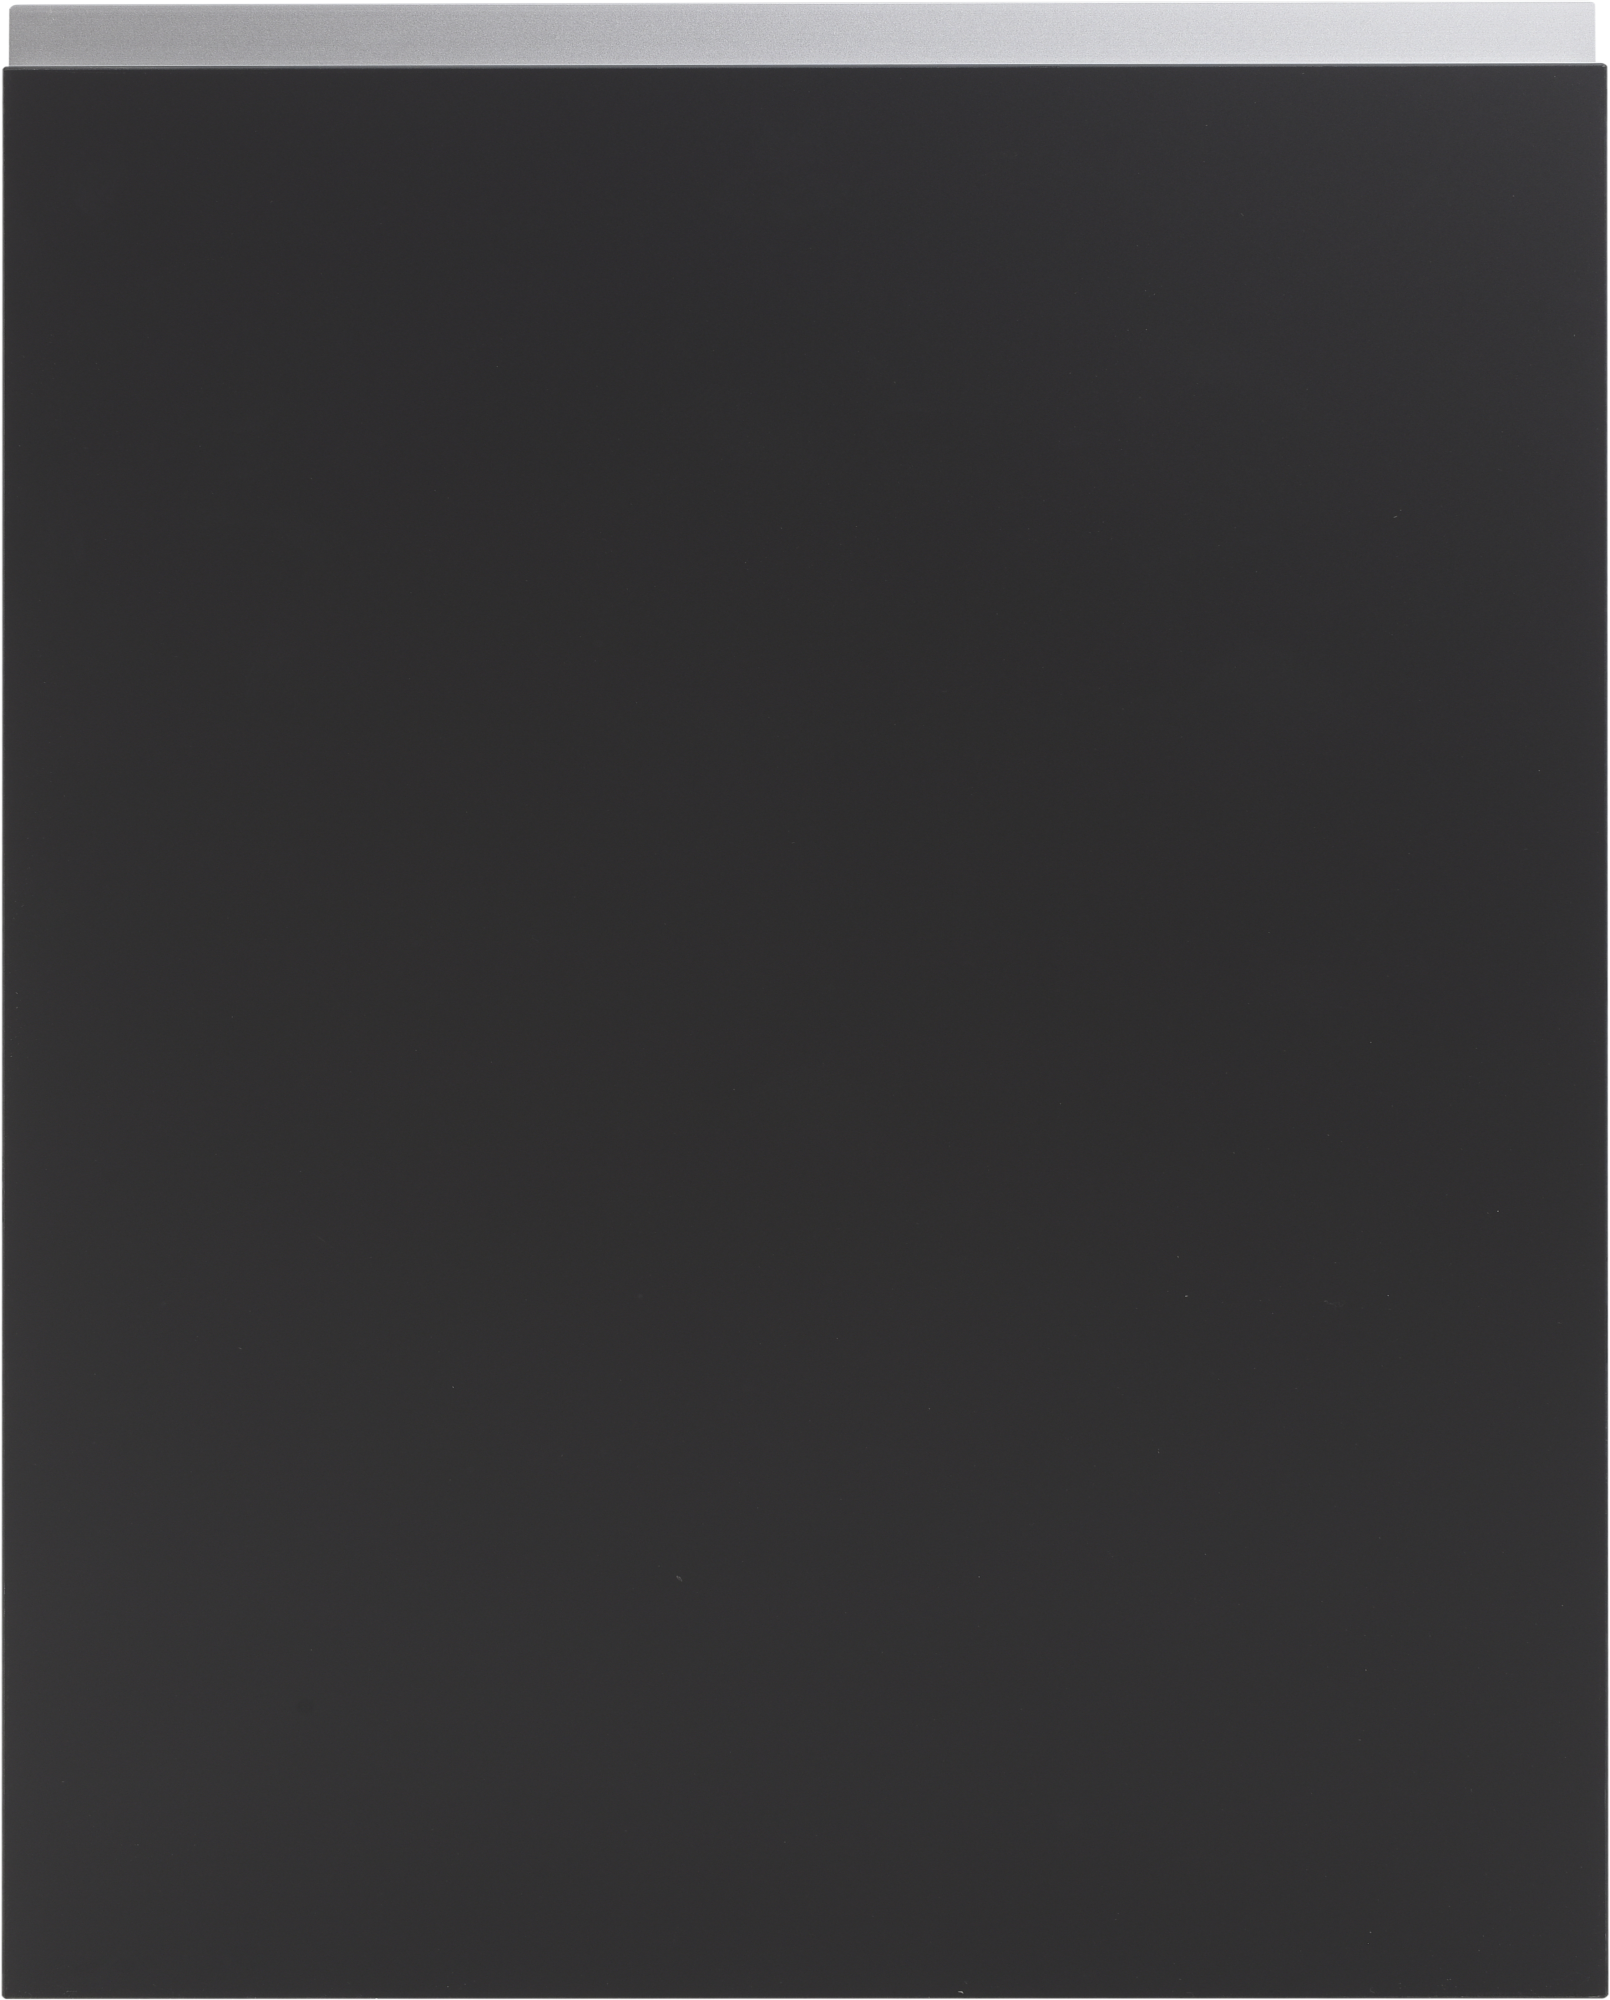 Frente para cajón mikonos antracita brillo 59,7x76,5 cm